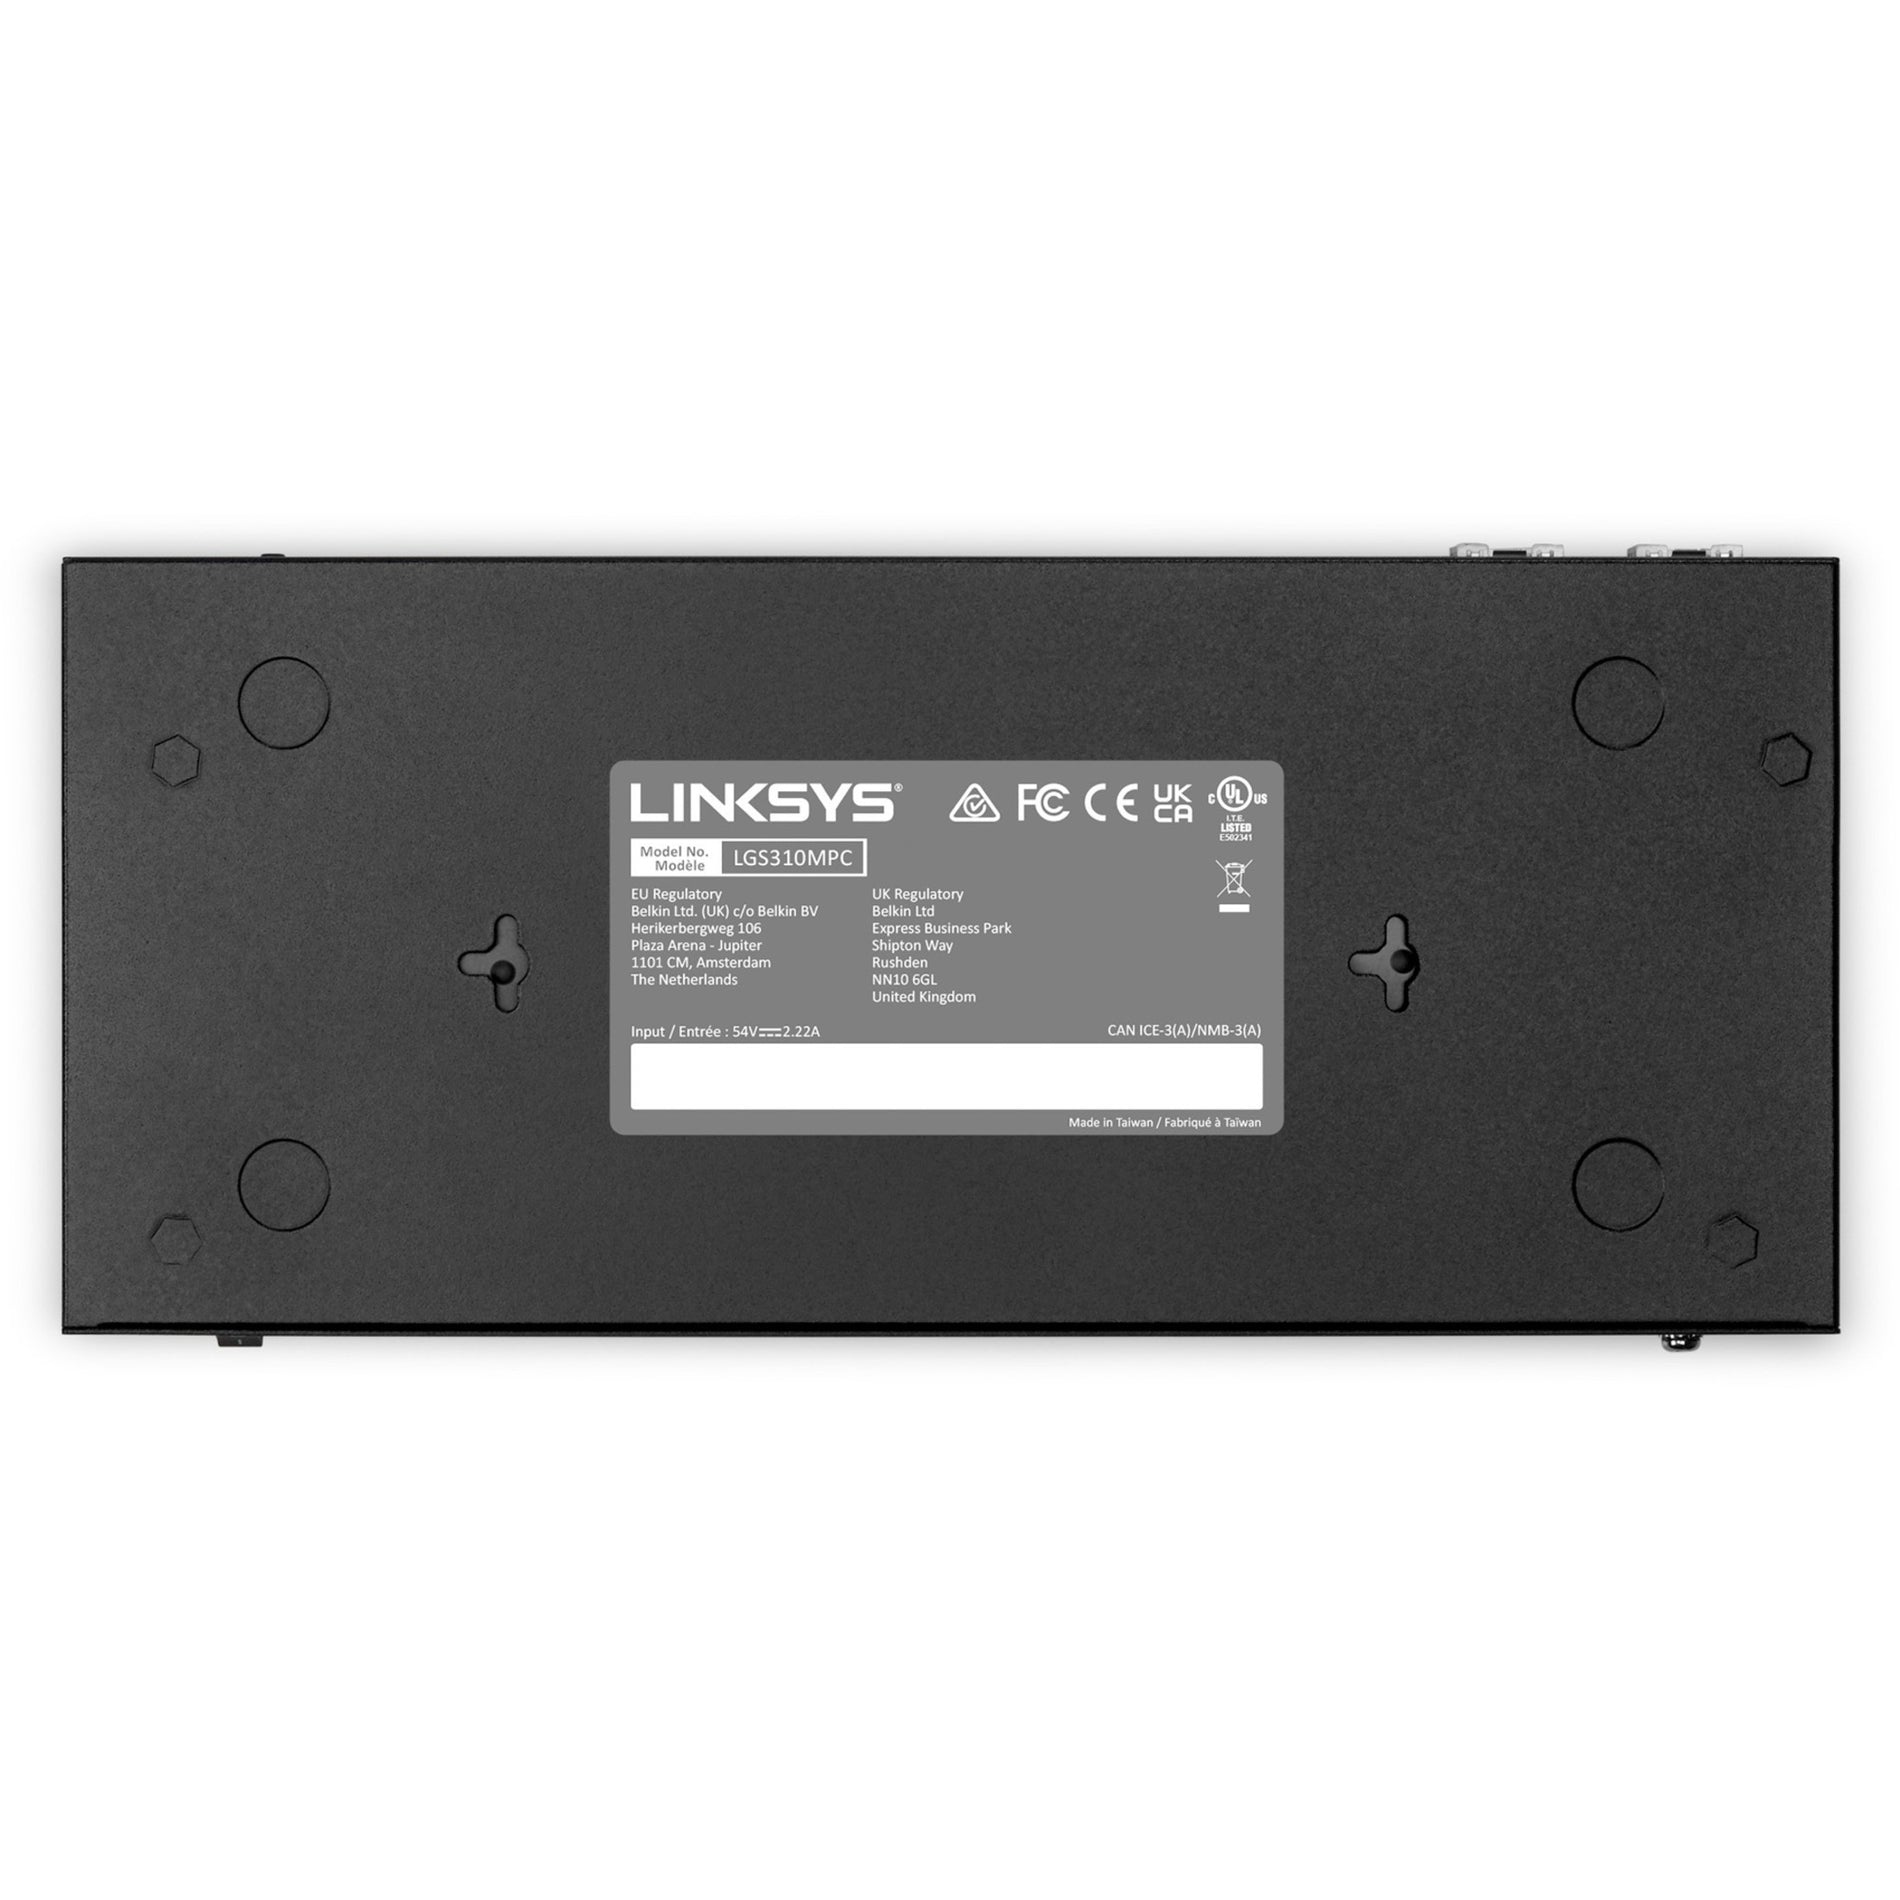 Linksys LGS310MPC 8-Port Managed Gigabit PoE+ Switch with 2 1G SFP Uplinks, TAA Compliant, 110W PoE Budget